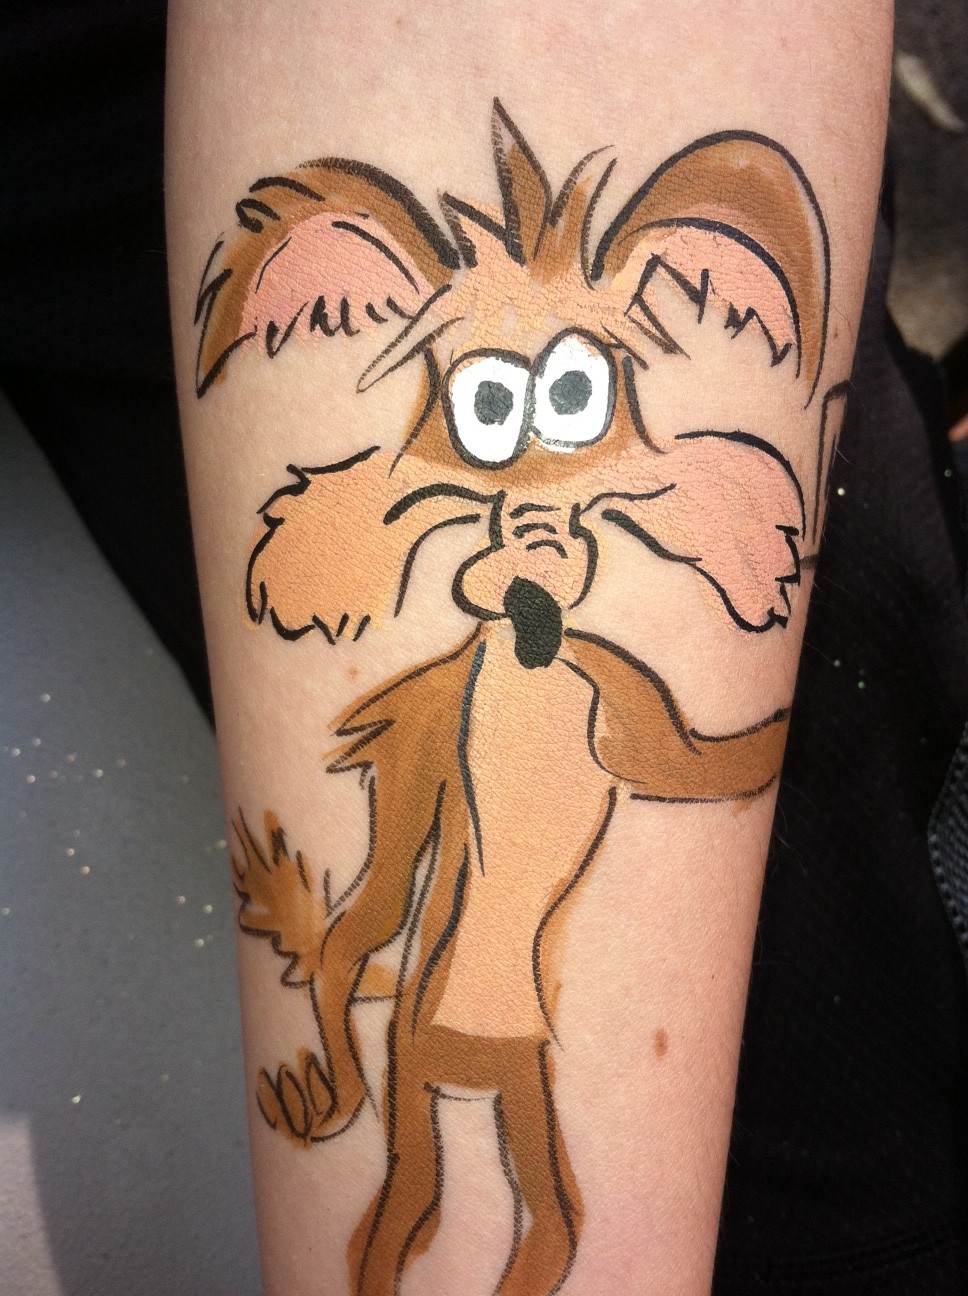 Wile Coyote free tattoo